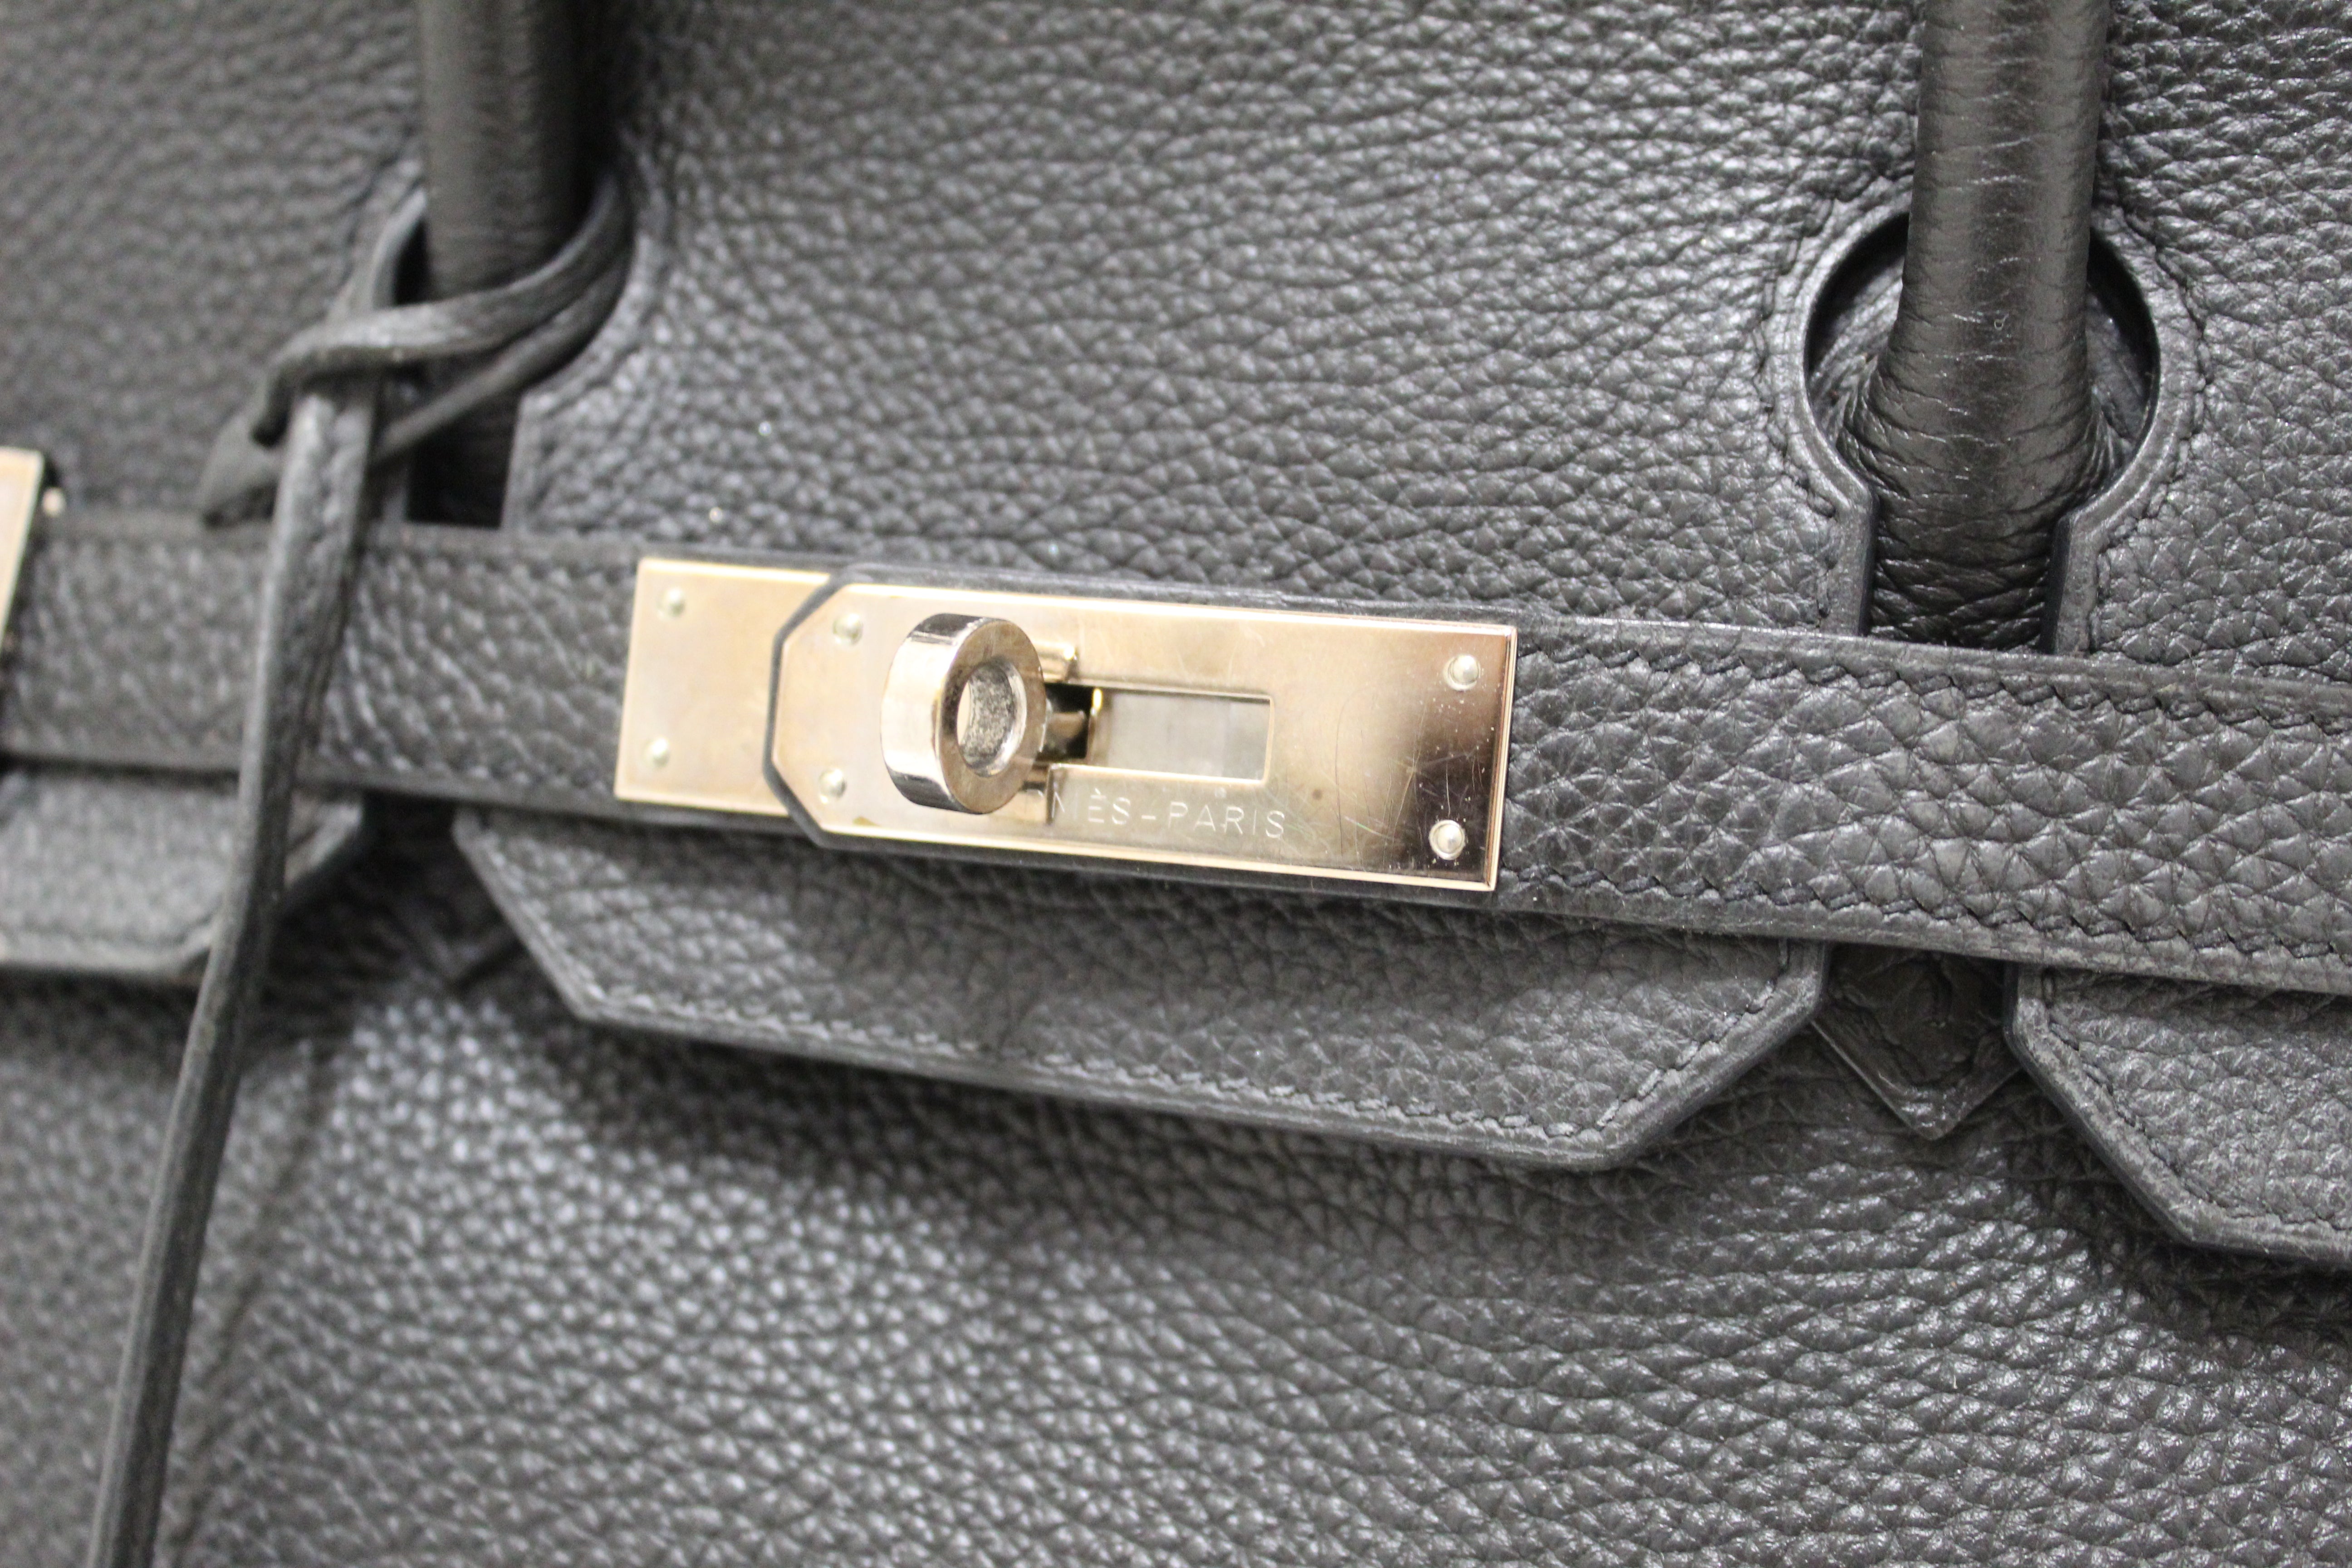 Authentic Hermes Black Togo Leather Birkin 30 Handbag